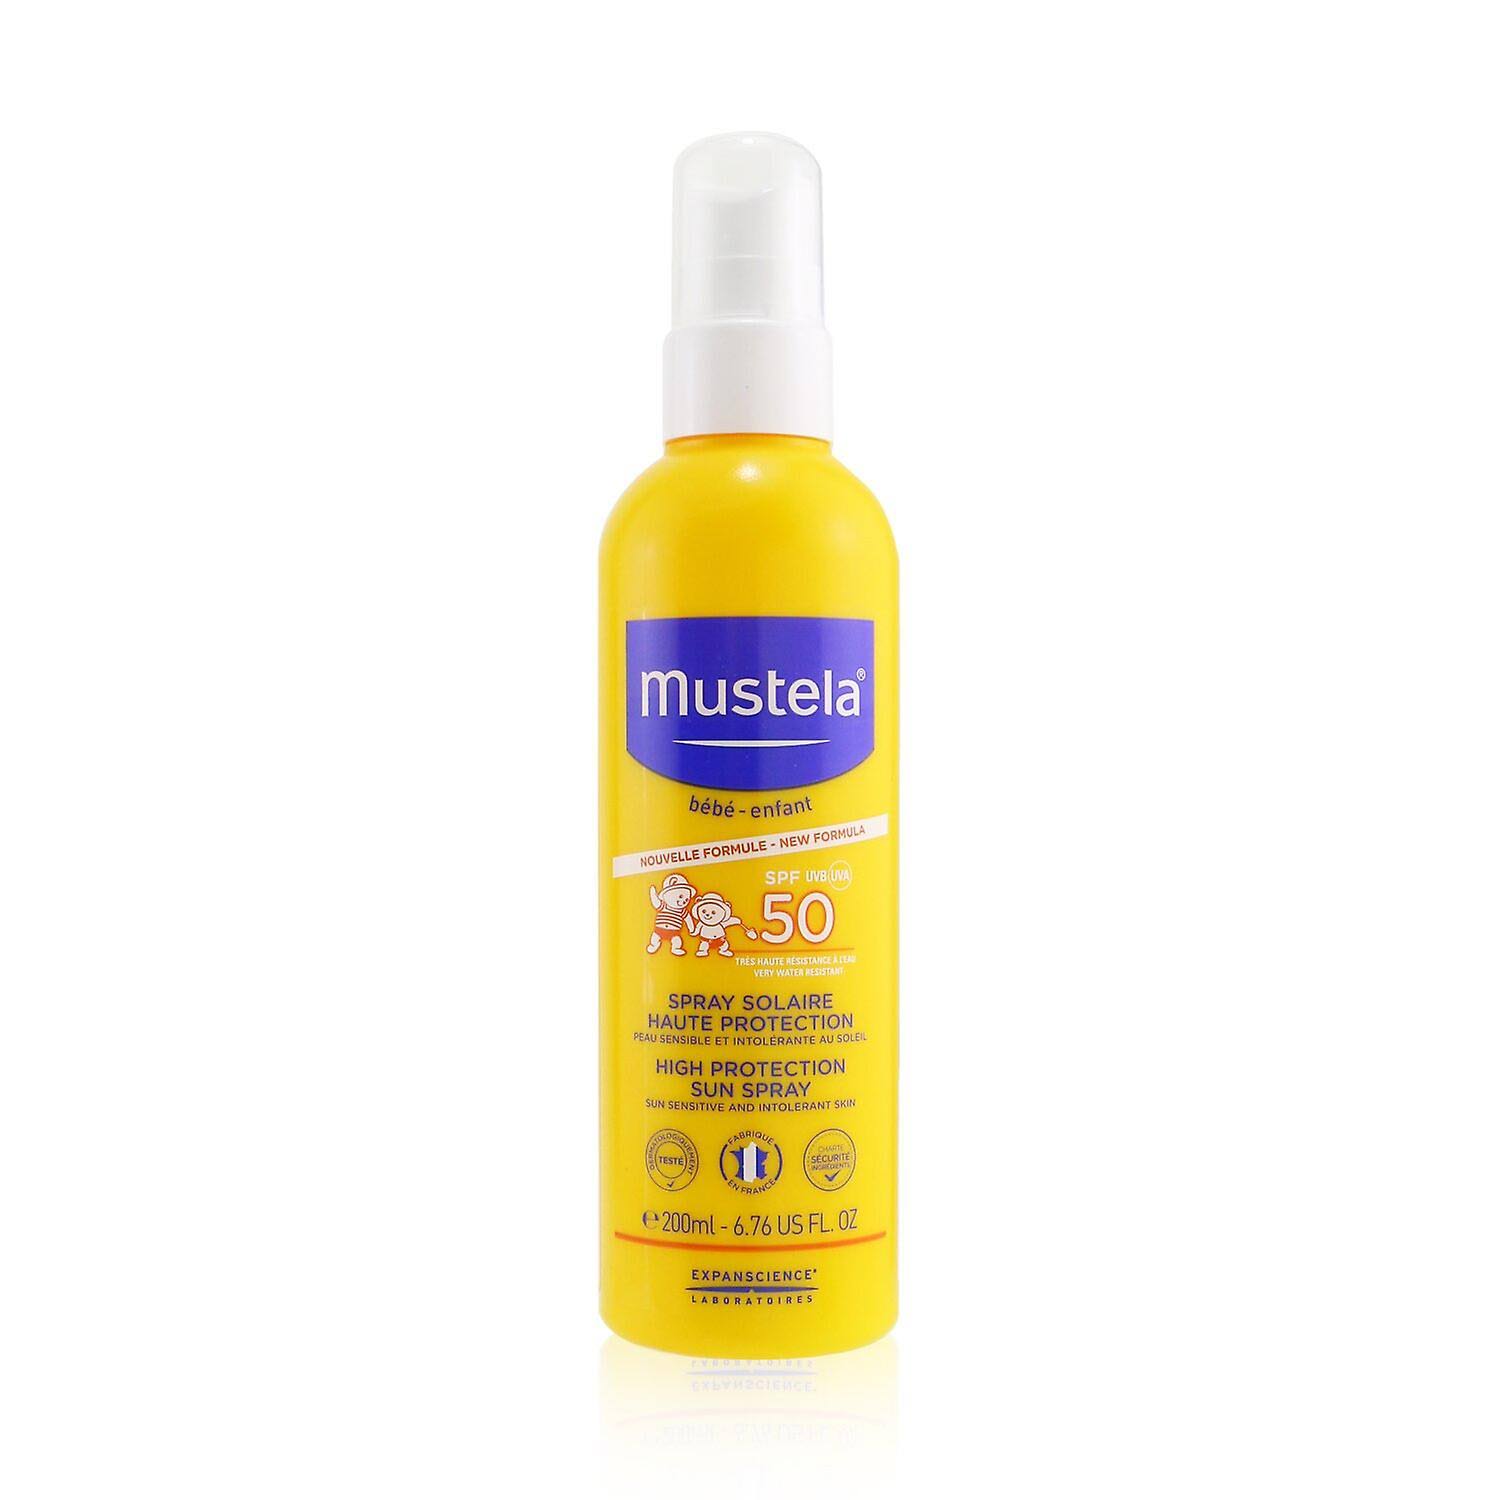 Mustela High Protection Sun Spray SPF 50 - Very Water Resistant 200ml